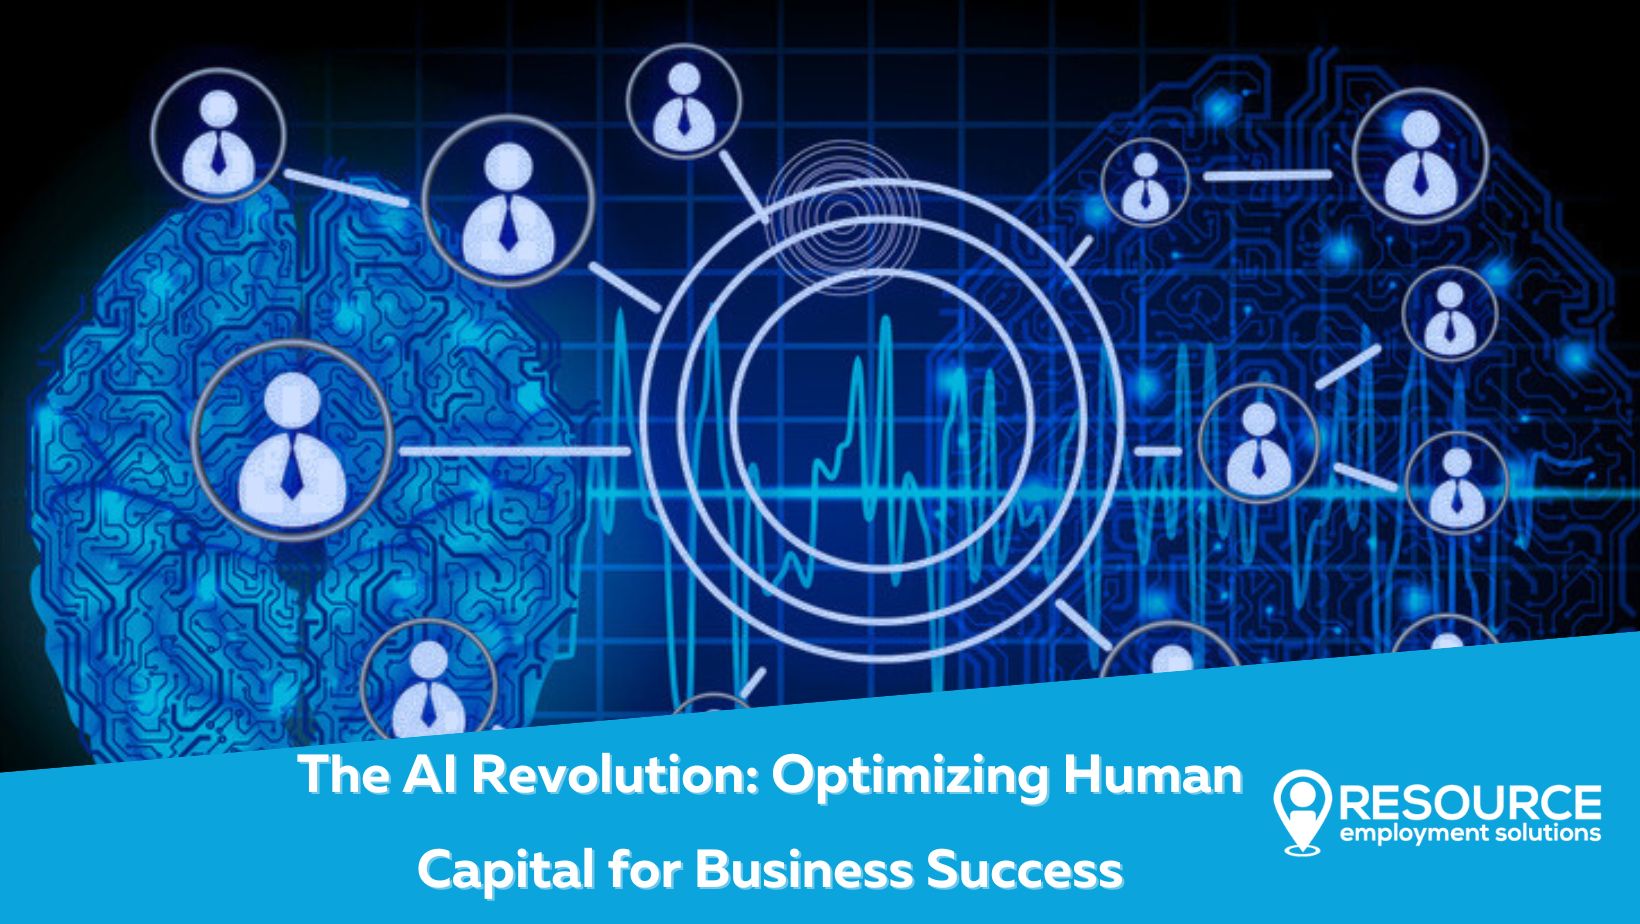 The AI Revolution: Optimizing Human Capital for Business Success